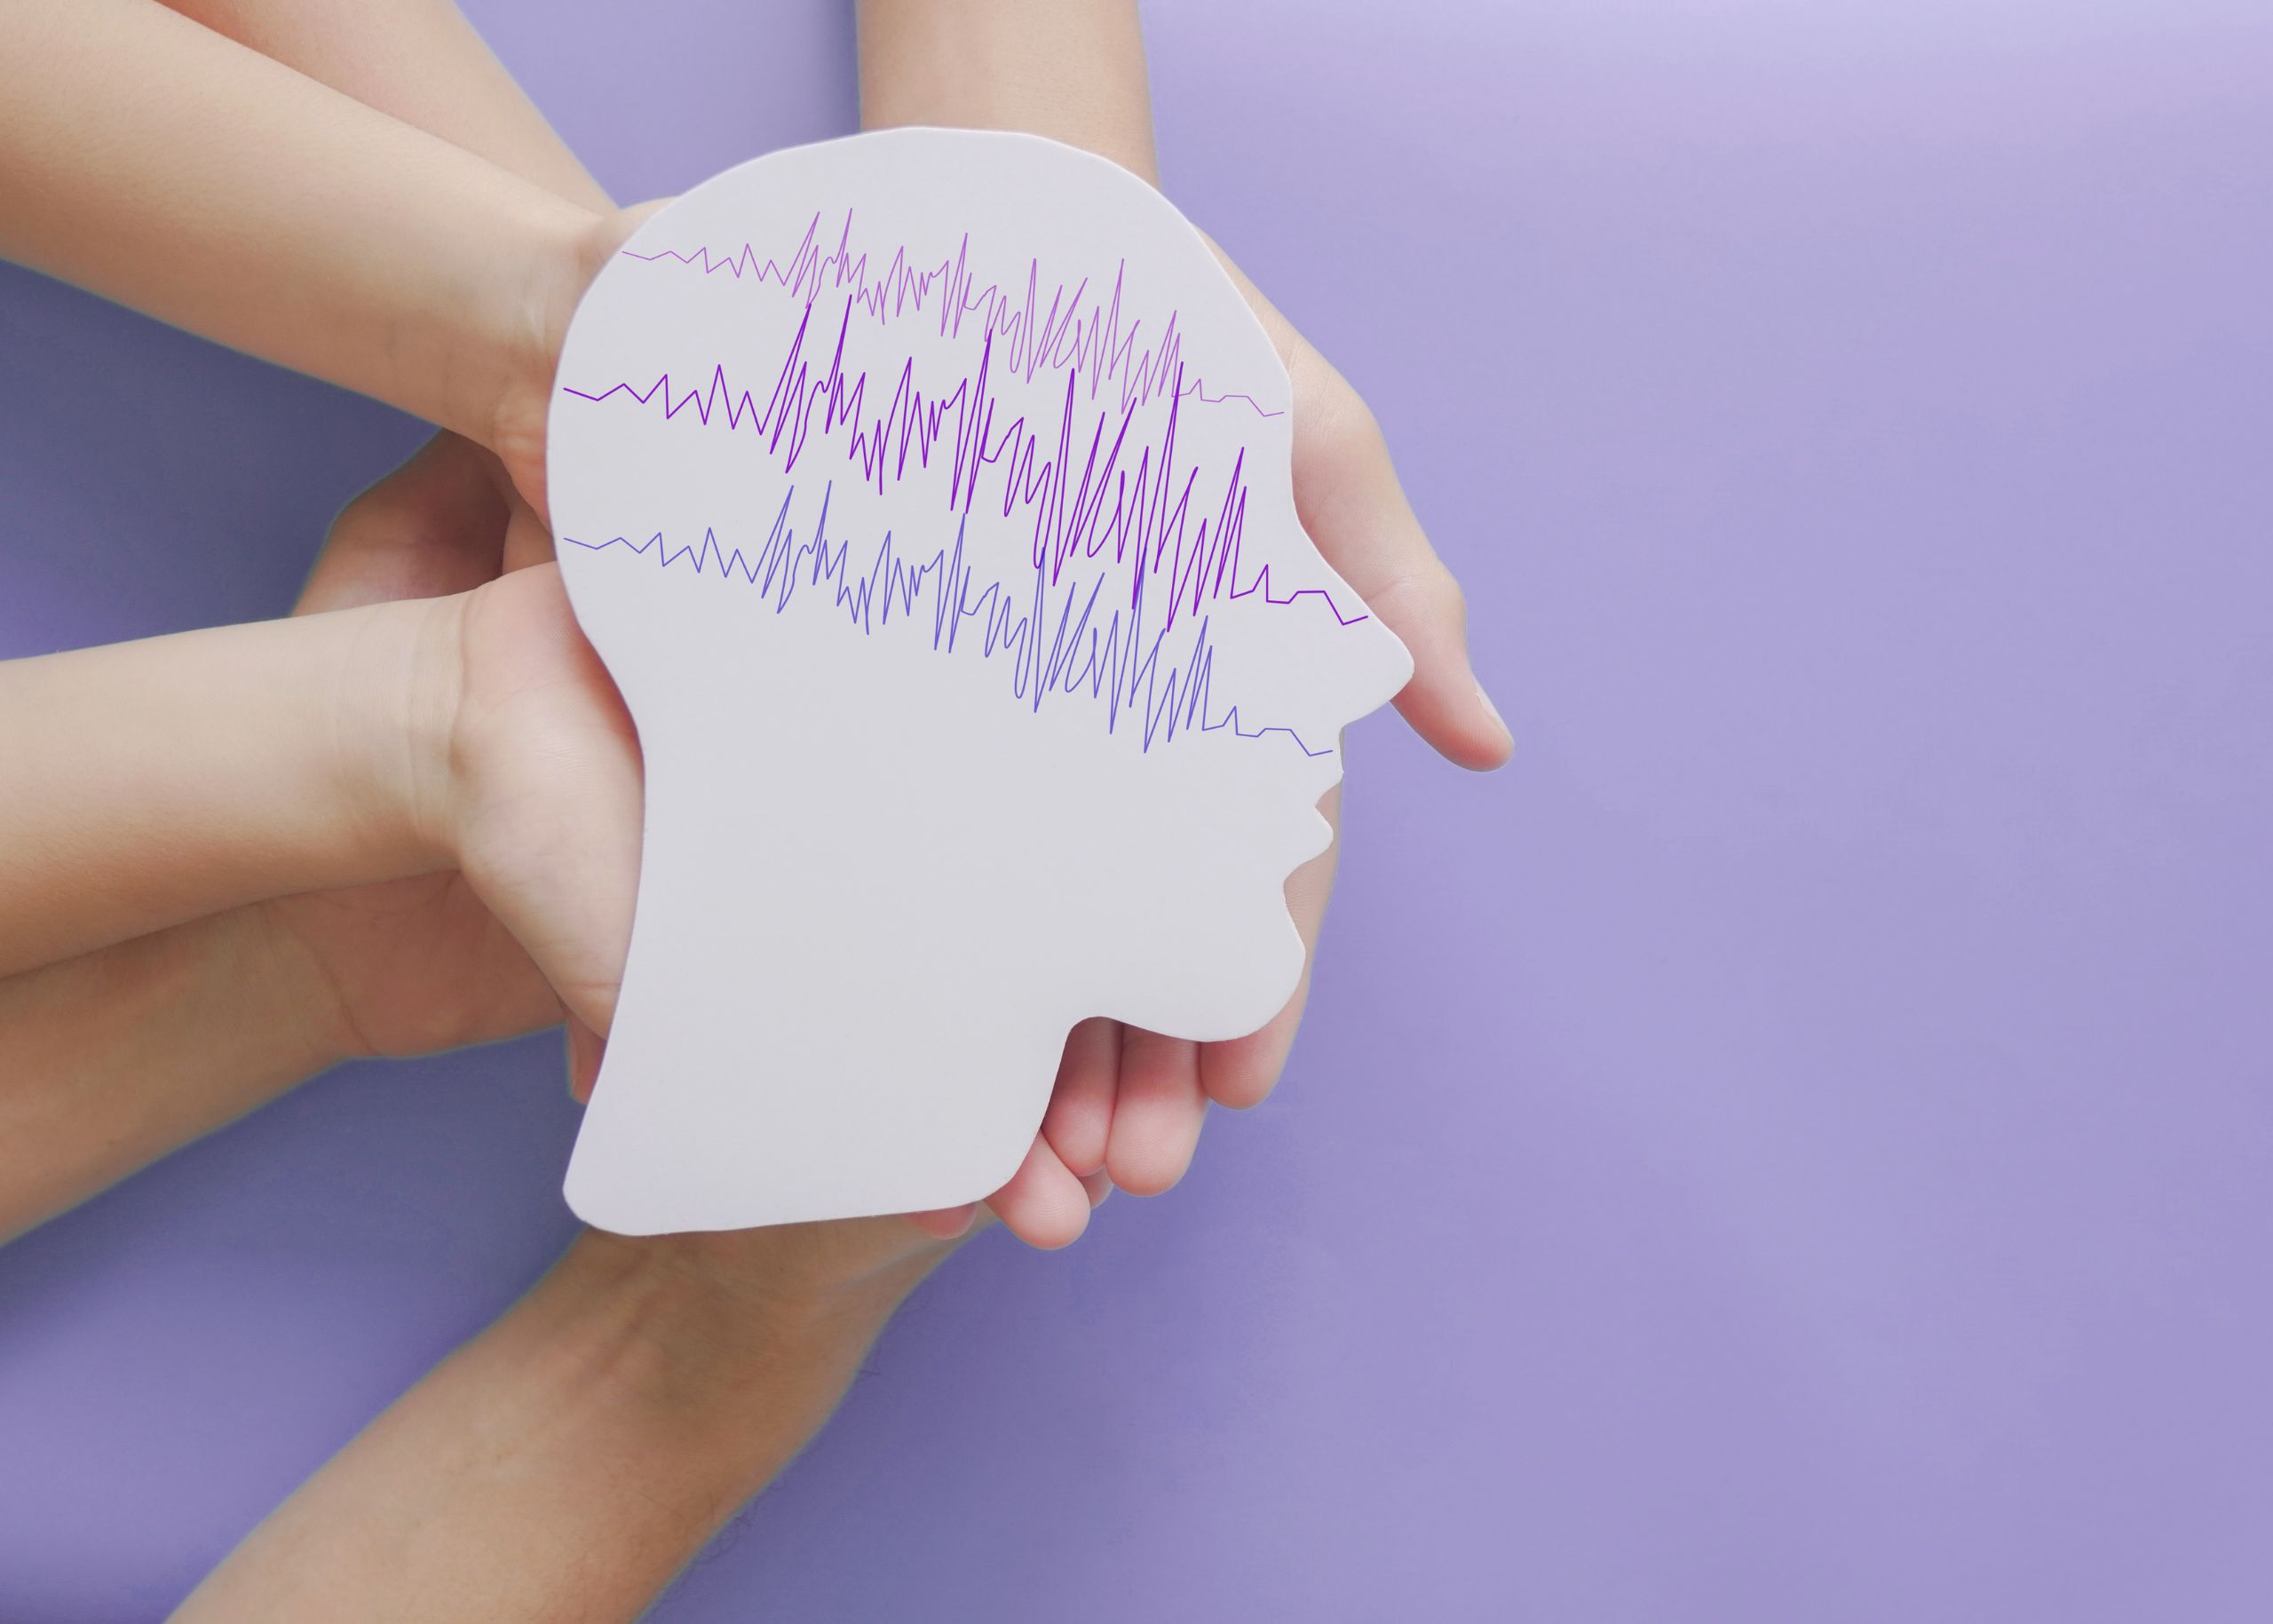 Epilepsy – Symptoms, Diagnosis & Treatment